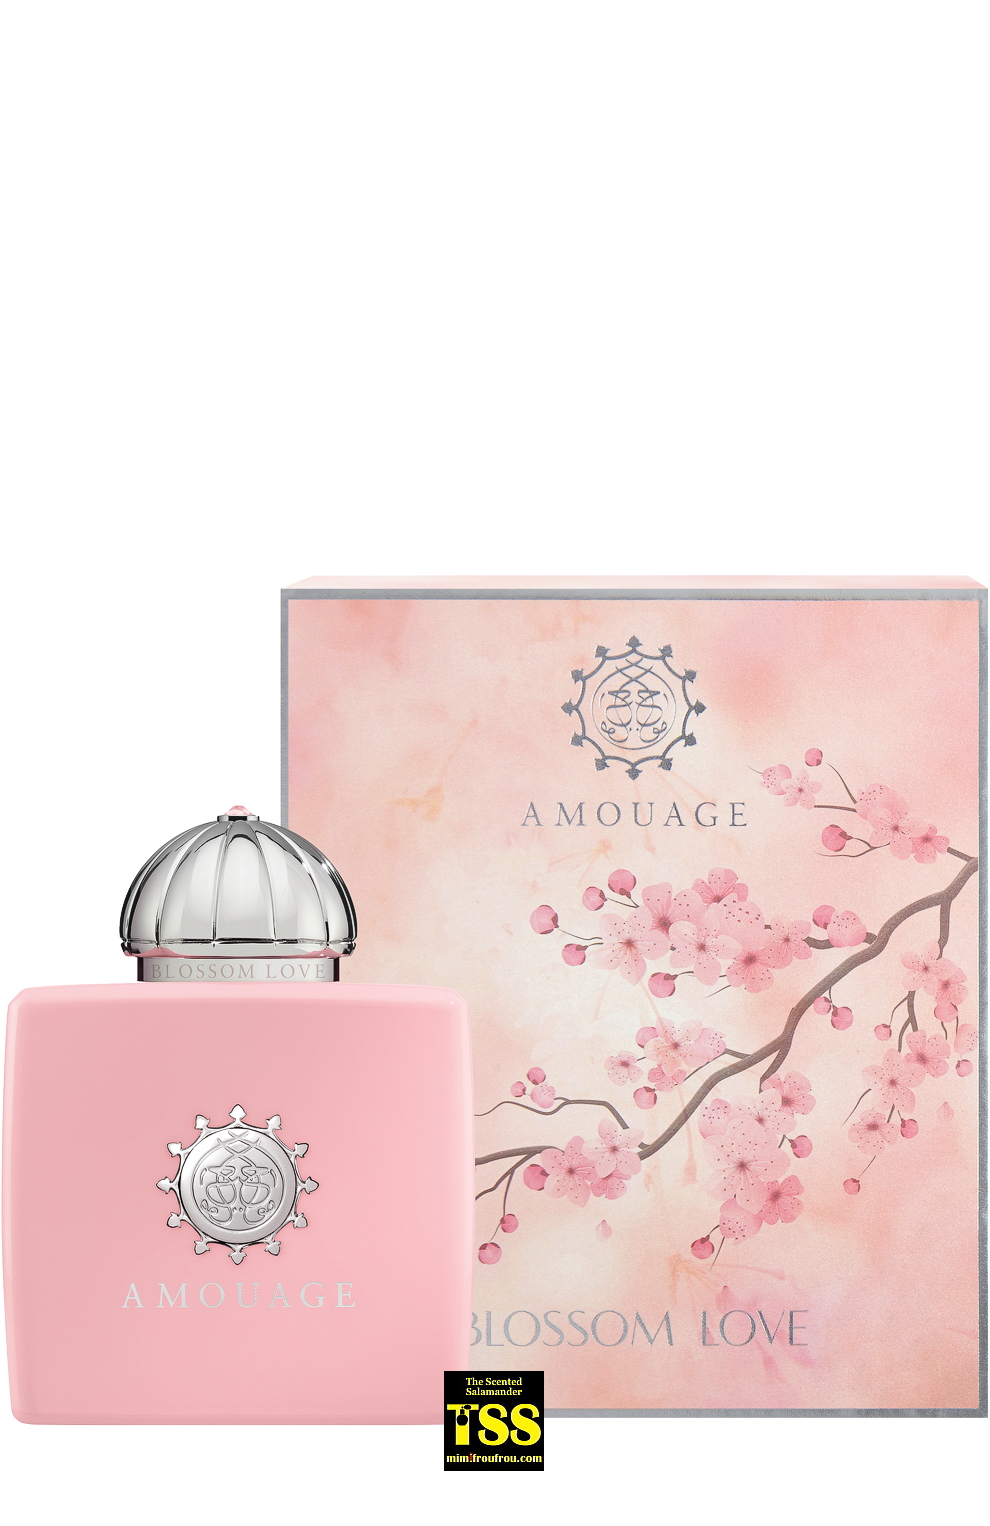 amouage-blossom-love-bottle.jpg